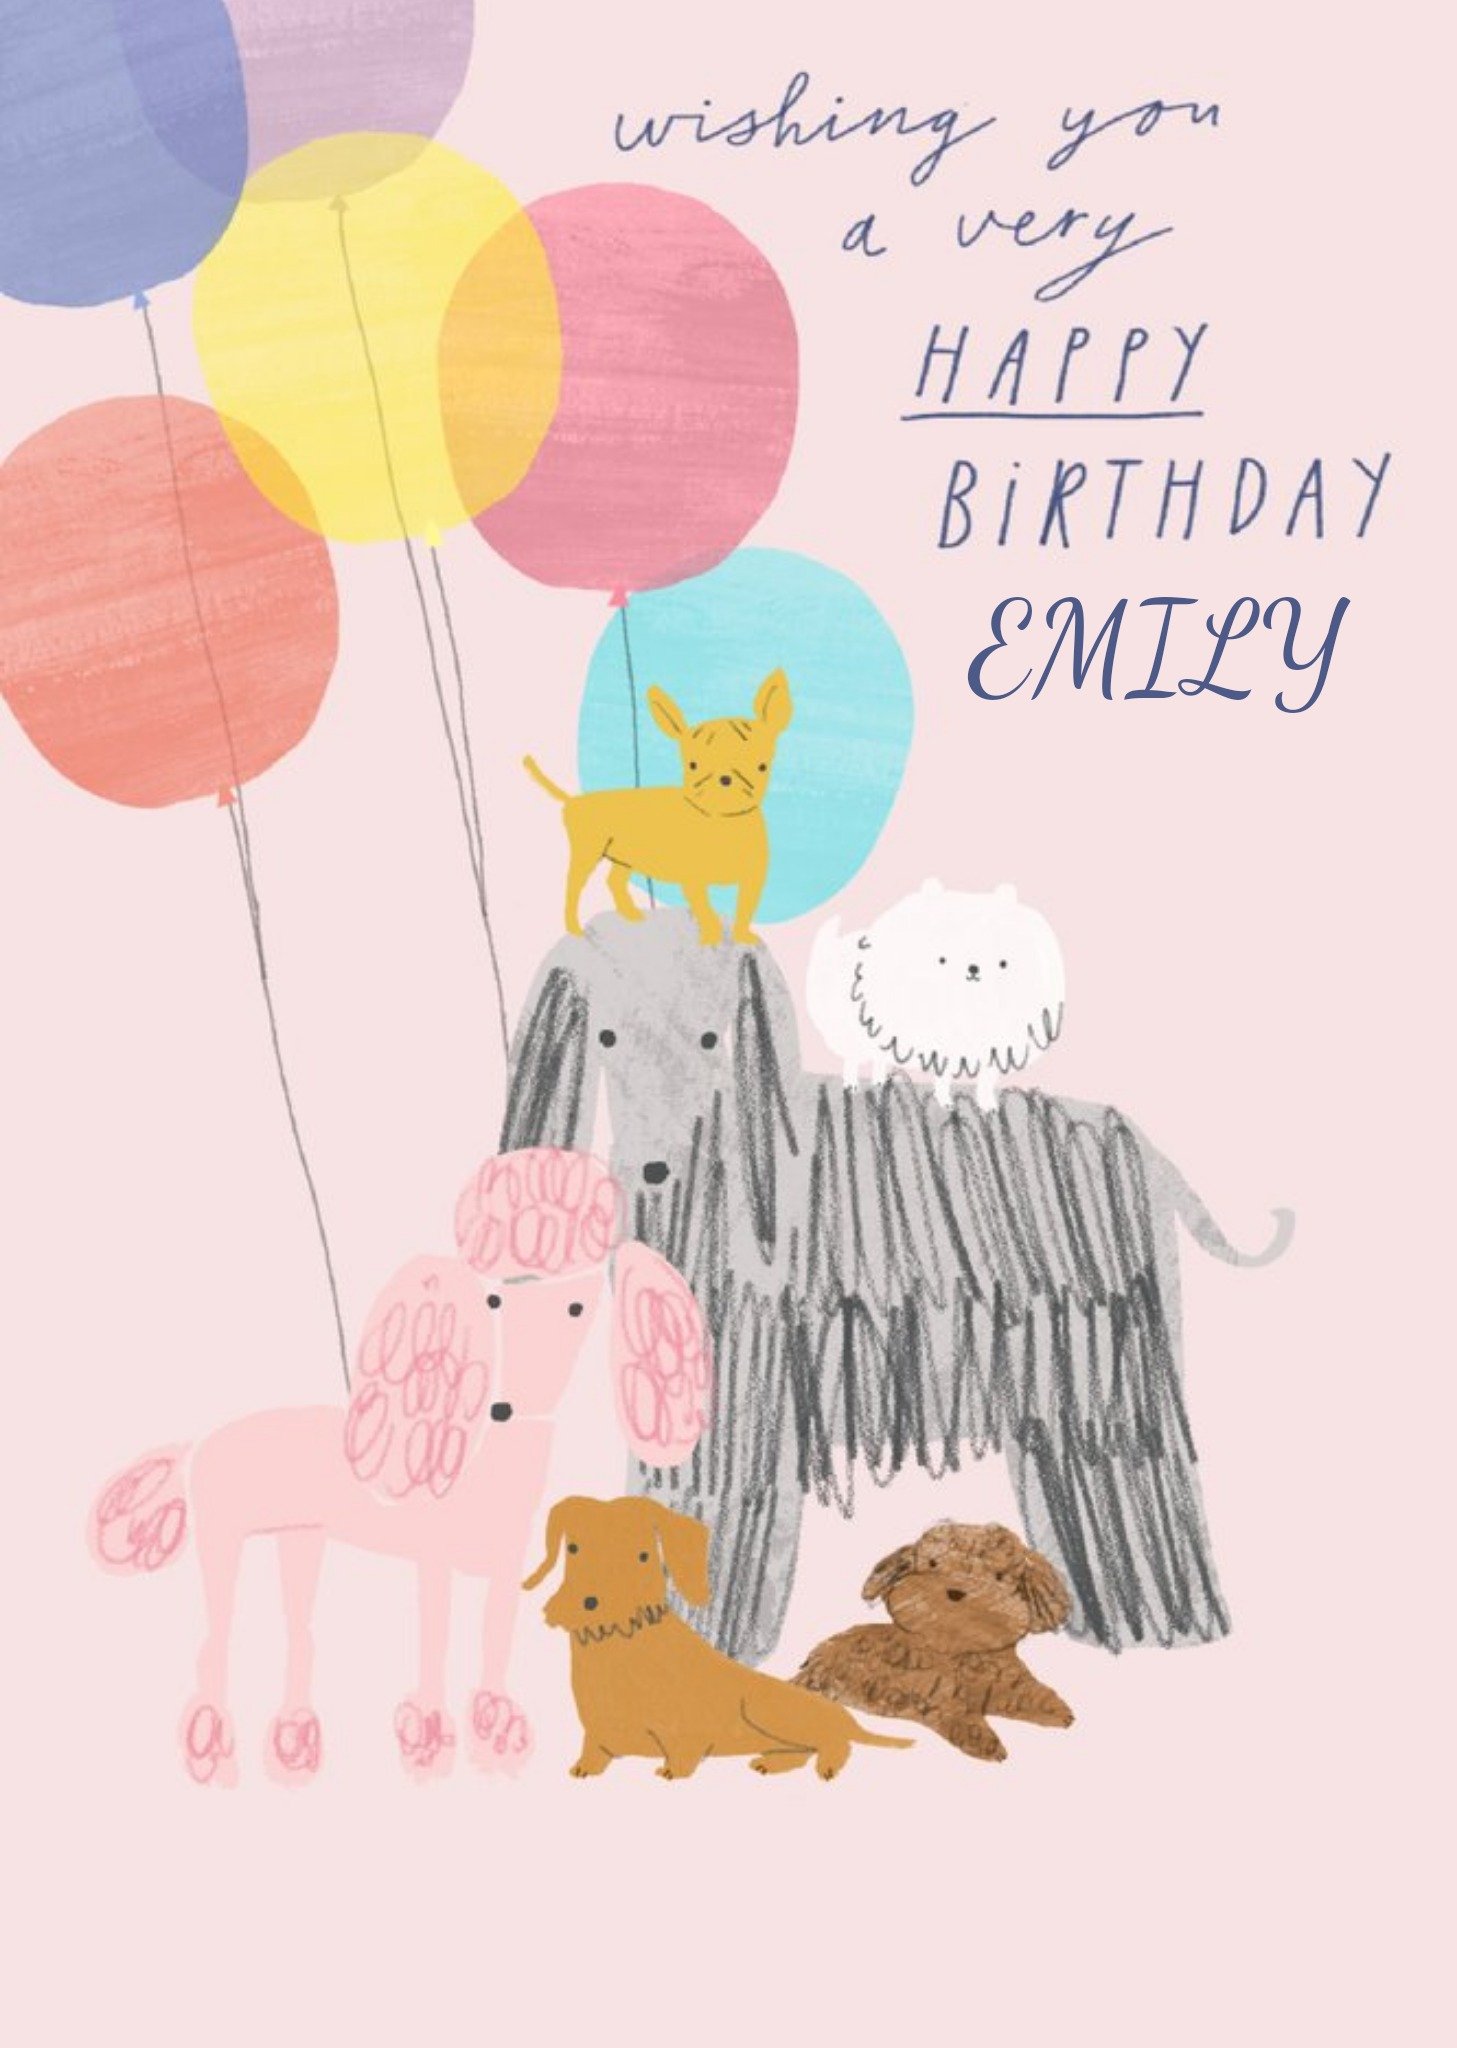 Moonpig Cute Dogs And Balloons Birthday Card Ecard